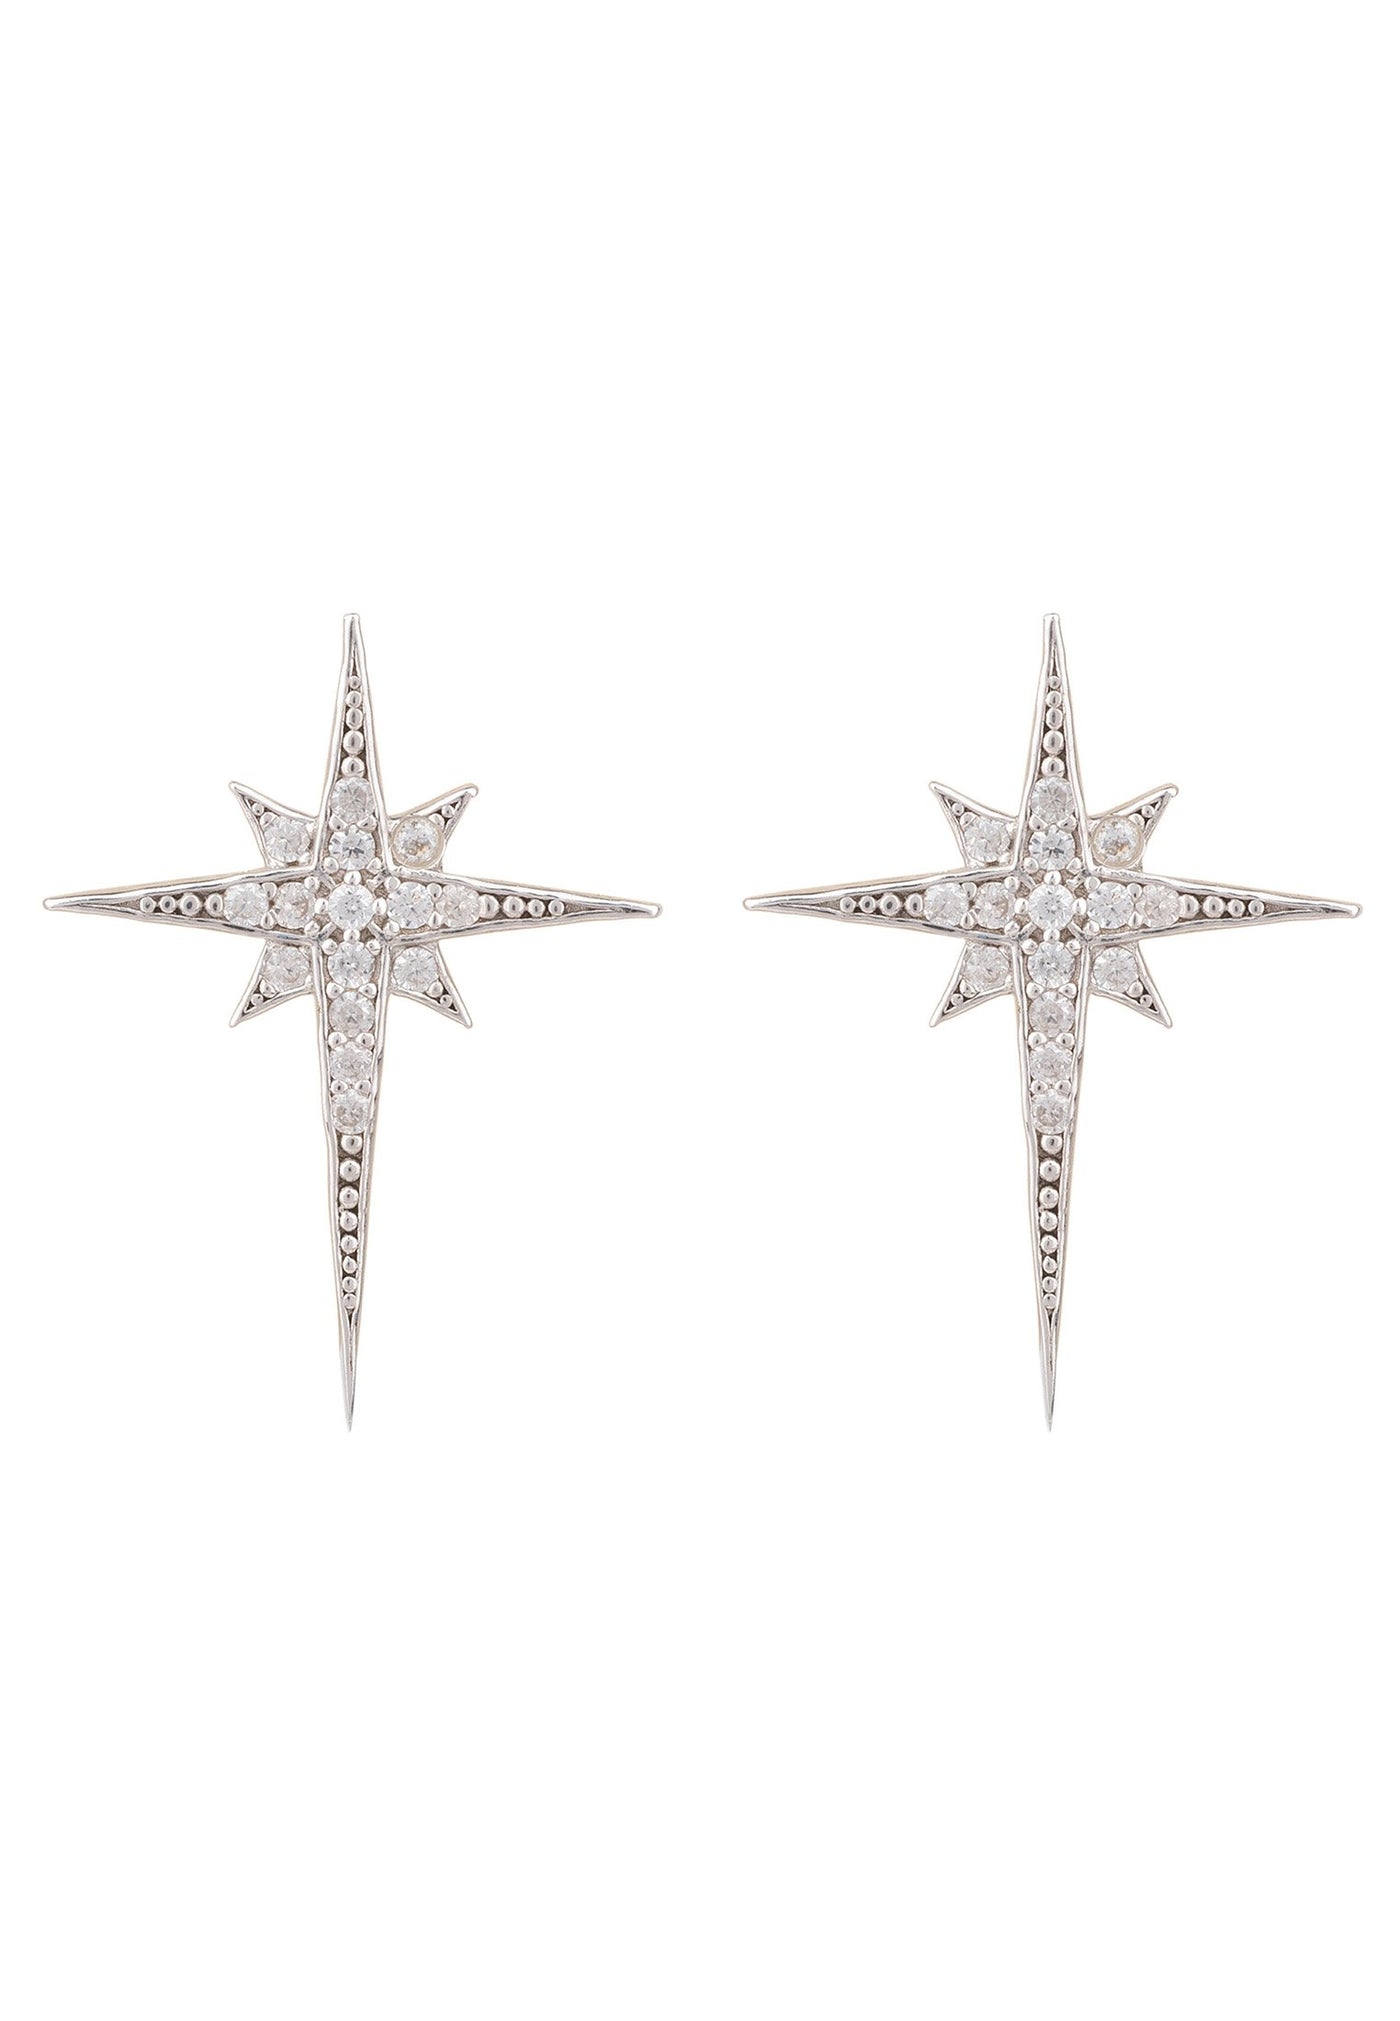 Stud earrings - North Star - 925 sterling silver